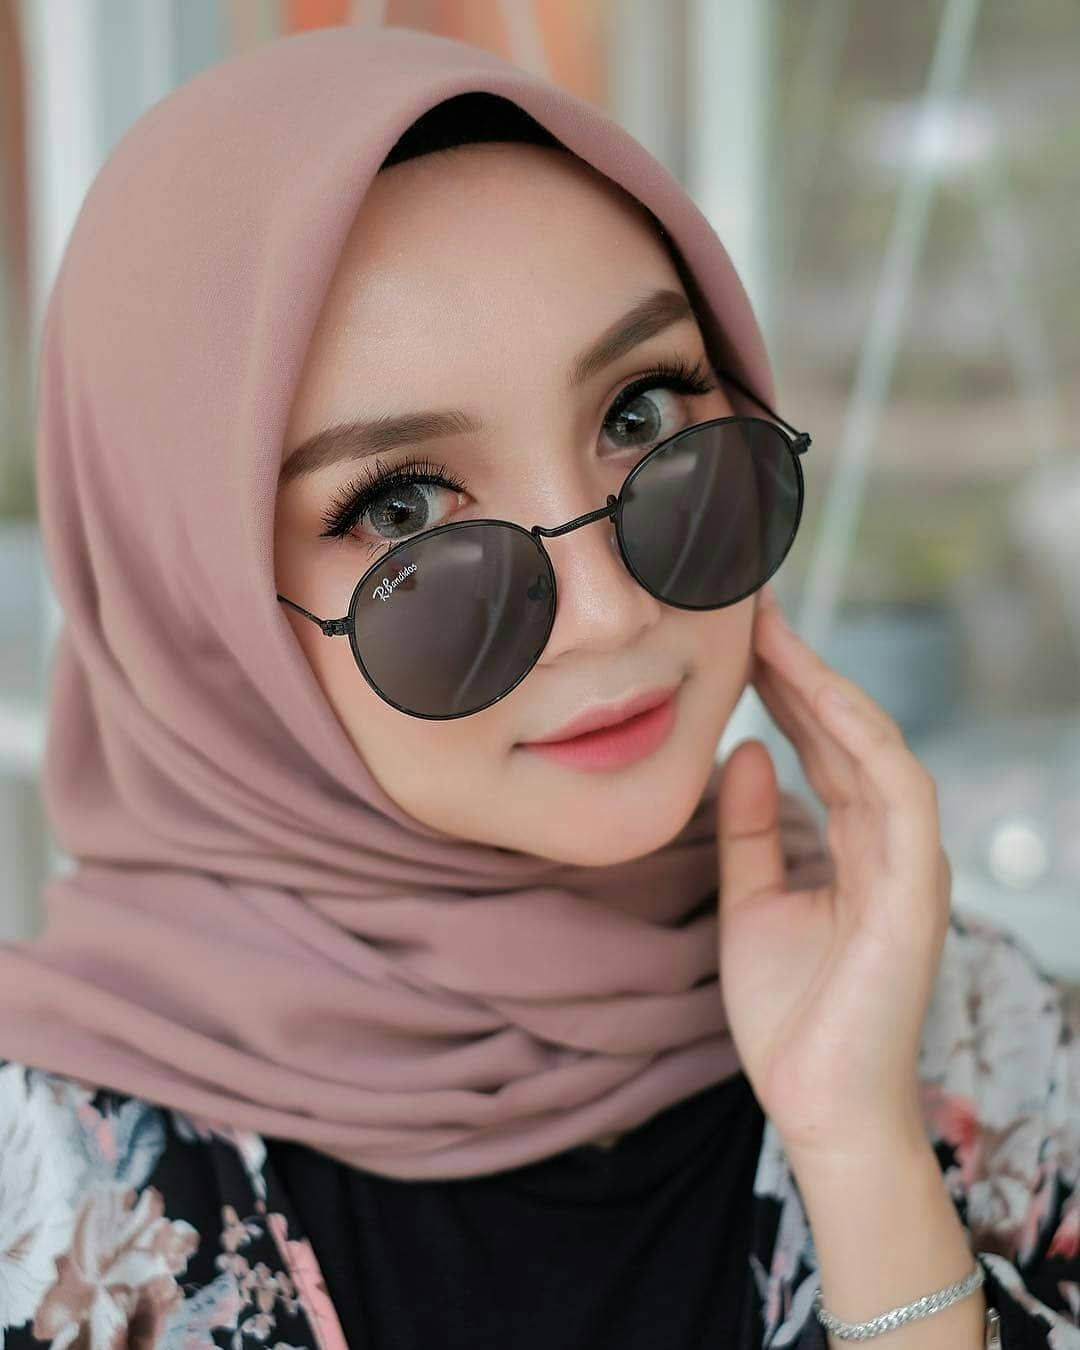 Hijab Girl Sunglasses Wallpaper